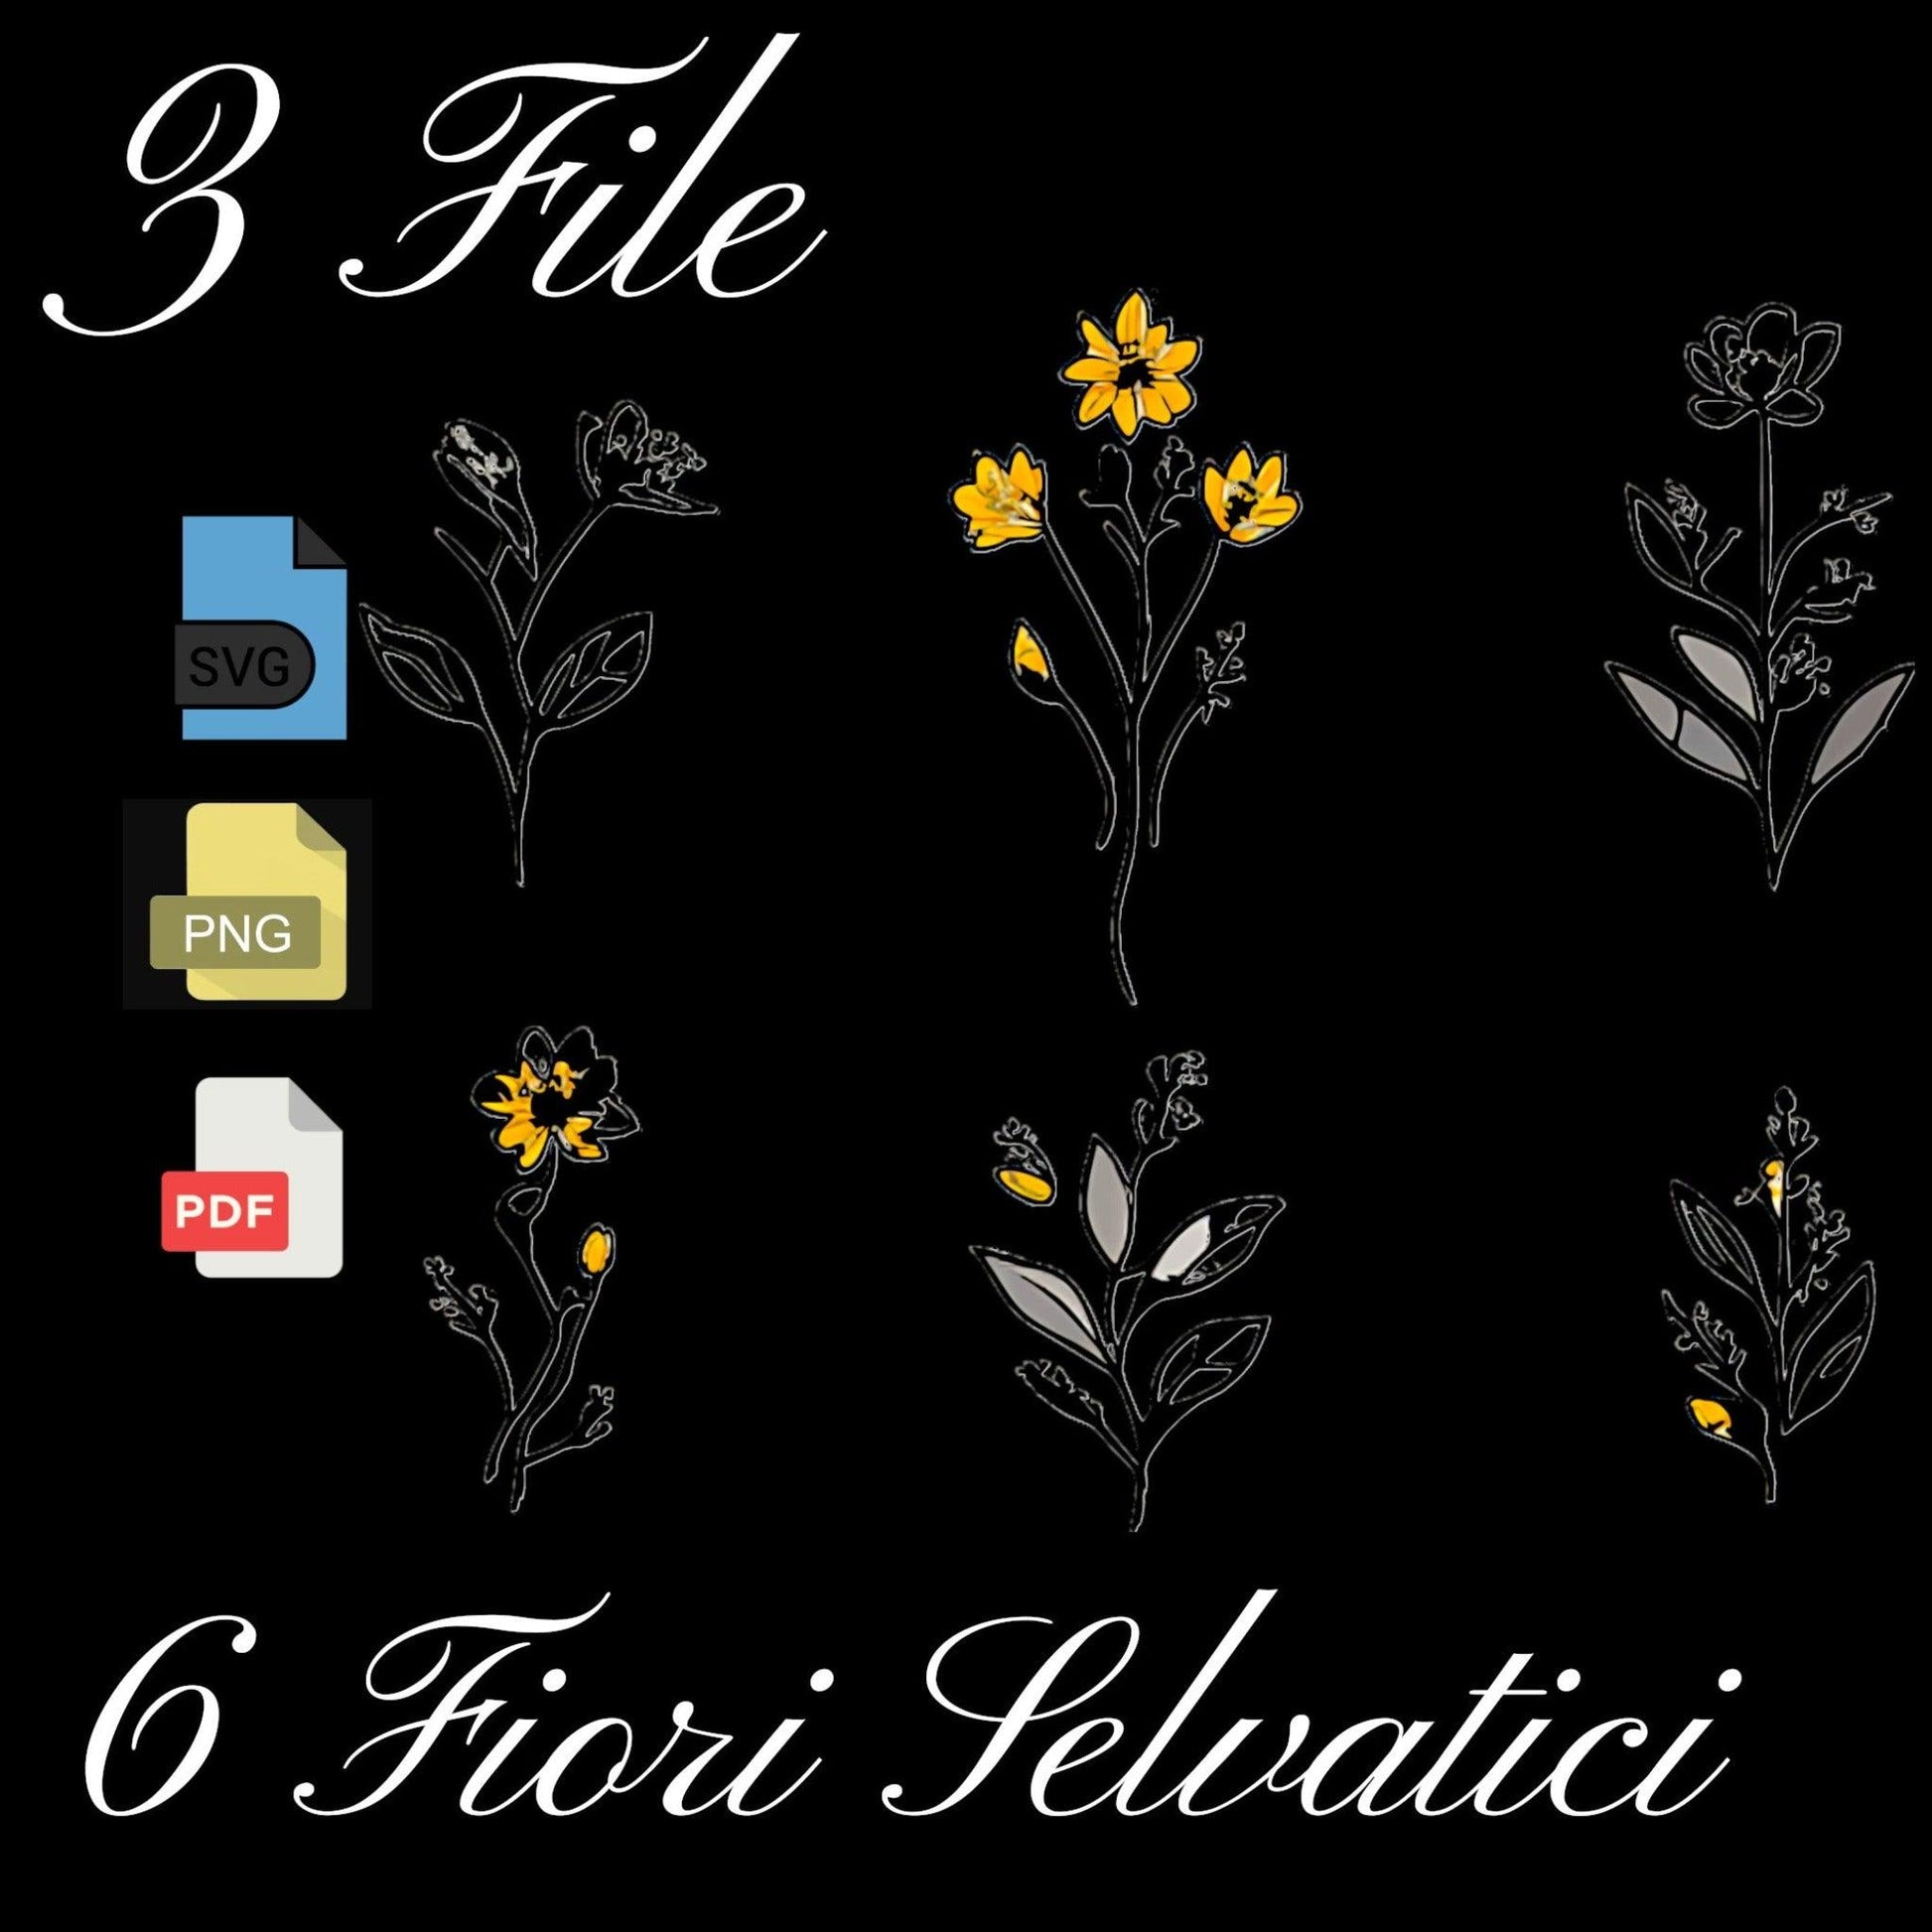 6 flower 3 file